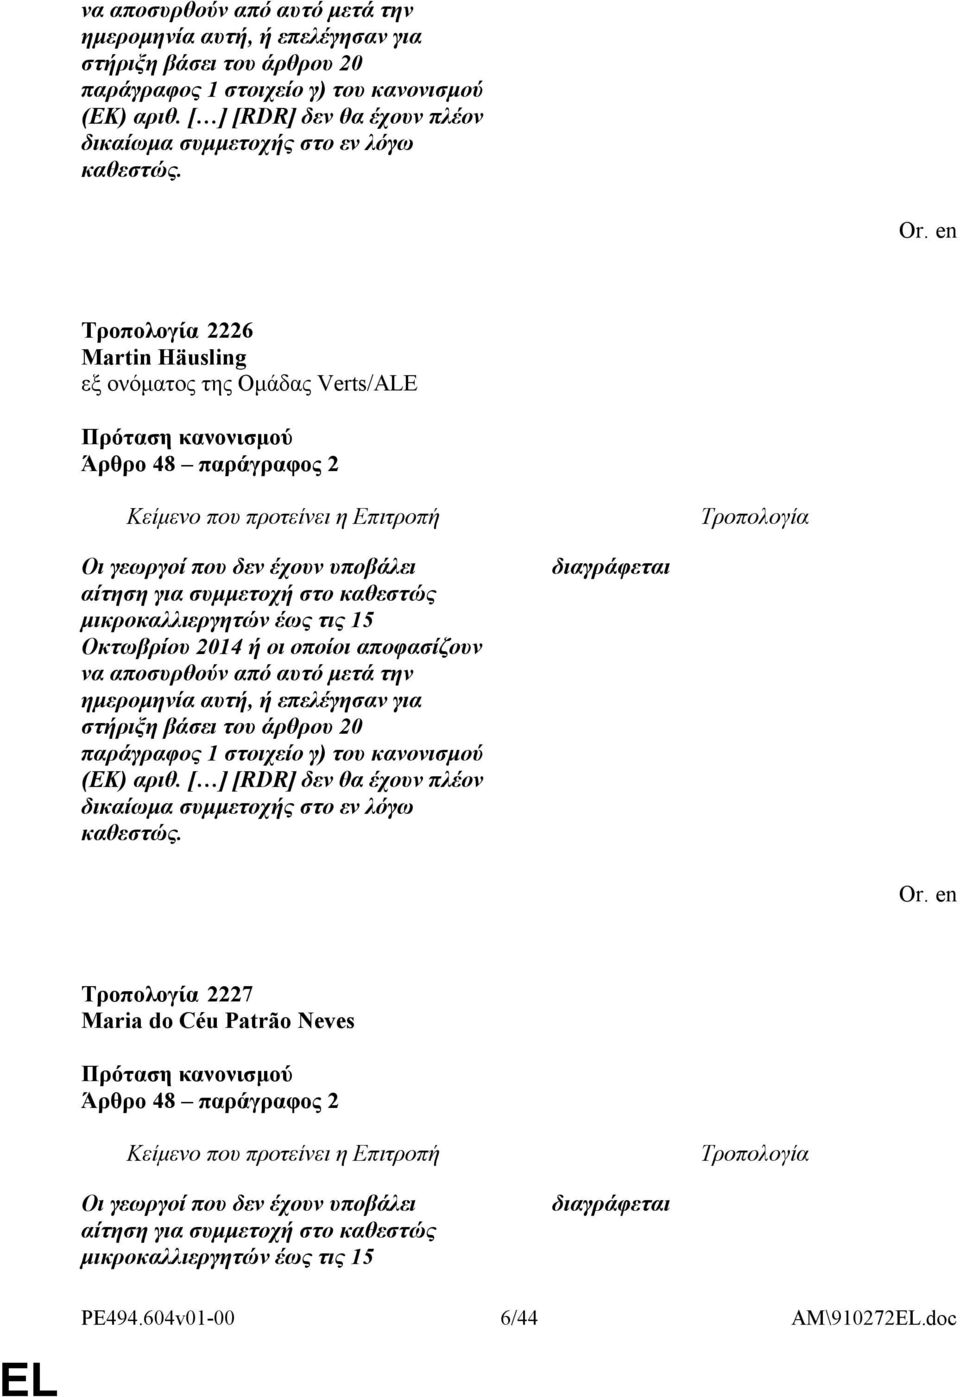 2226 Martin Häusling εξ ονόματος της Ομάδας Verts/ALE Άρθρο 48 παράγραφος 2 Οι γεωργοί που δεν έχουν υποβάλει αίτηση για συμμετοχή στο καθεστώς μικροκαλλιεργητών έως τις 15 Οκτωβρίου 2014 ή οι οποίοι